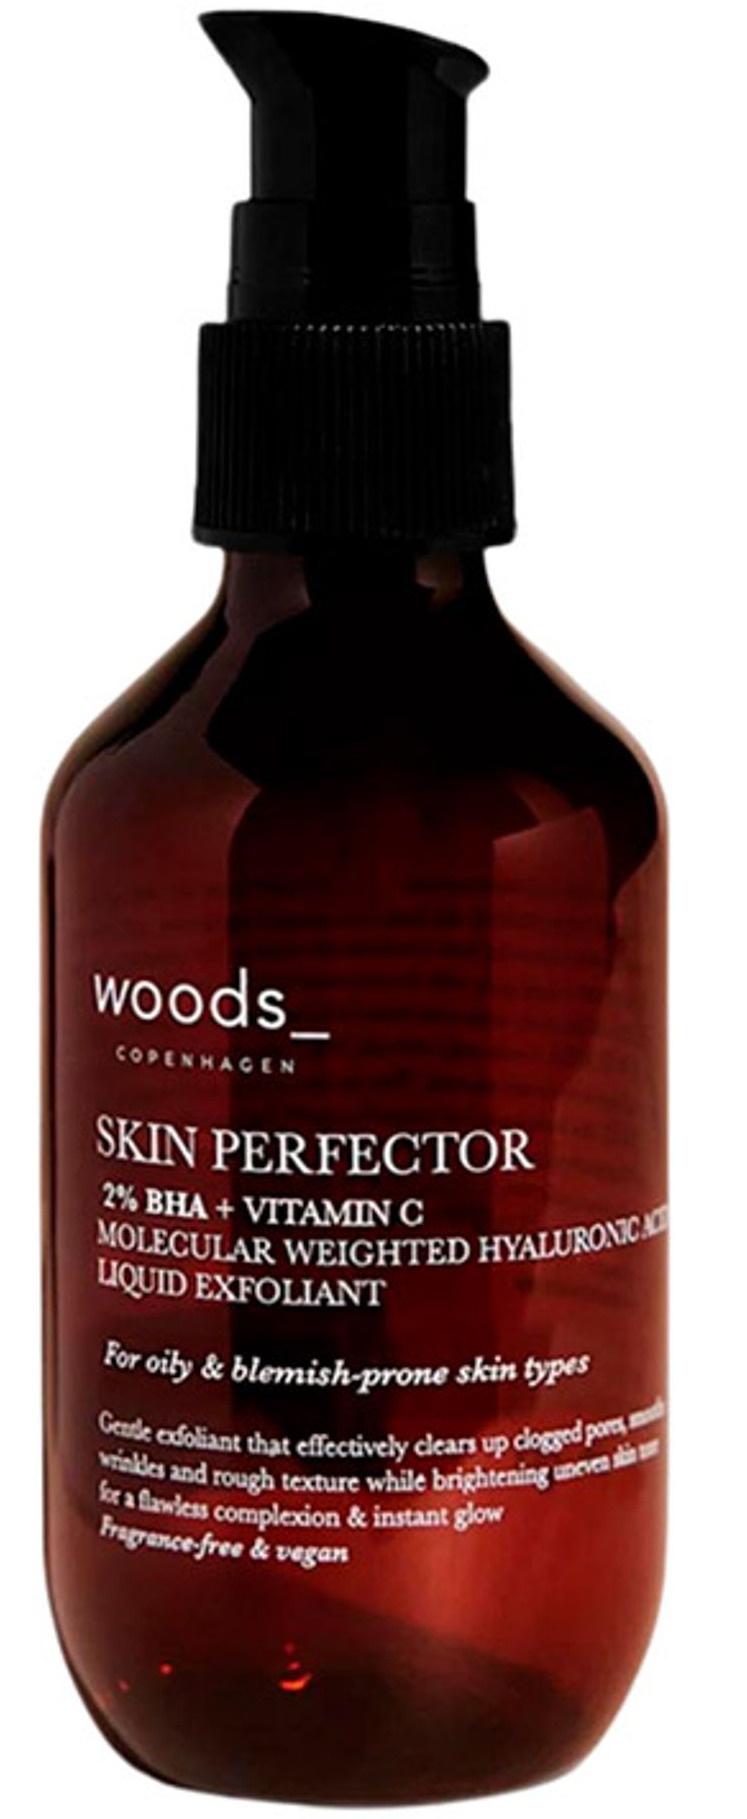 Woods Copenhagen Skin Perfector 2% BHA